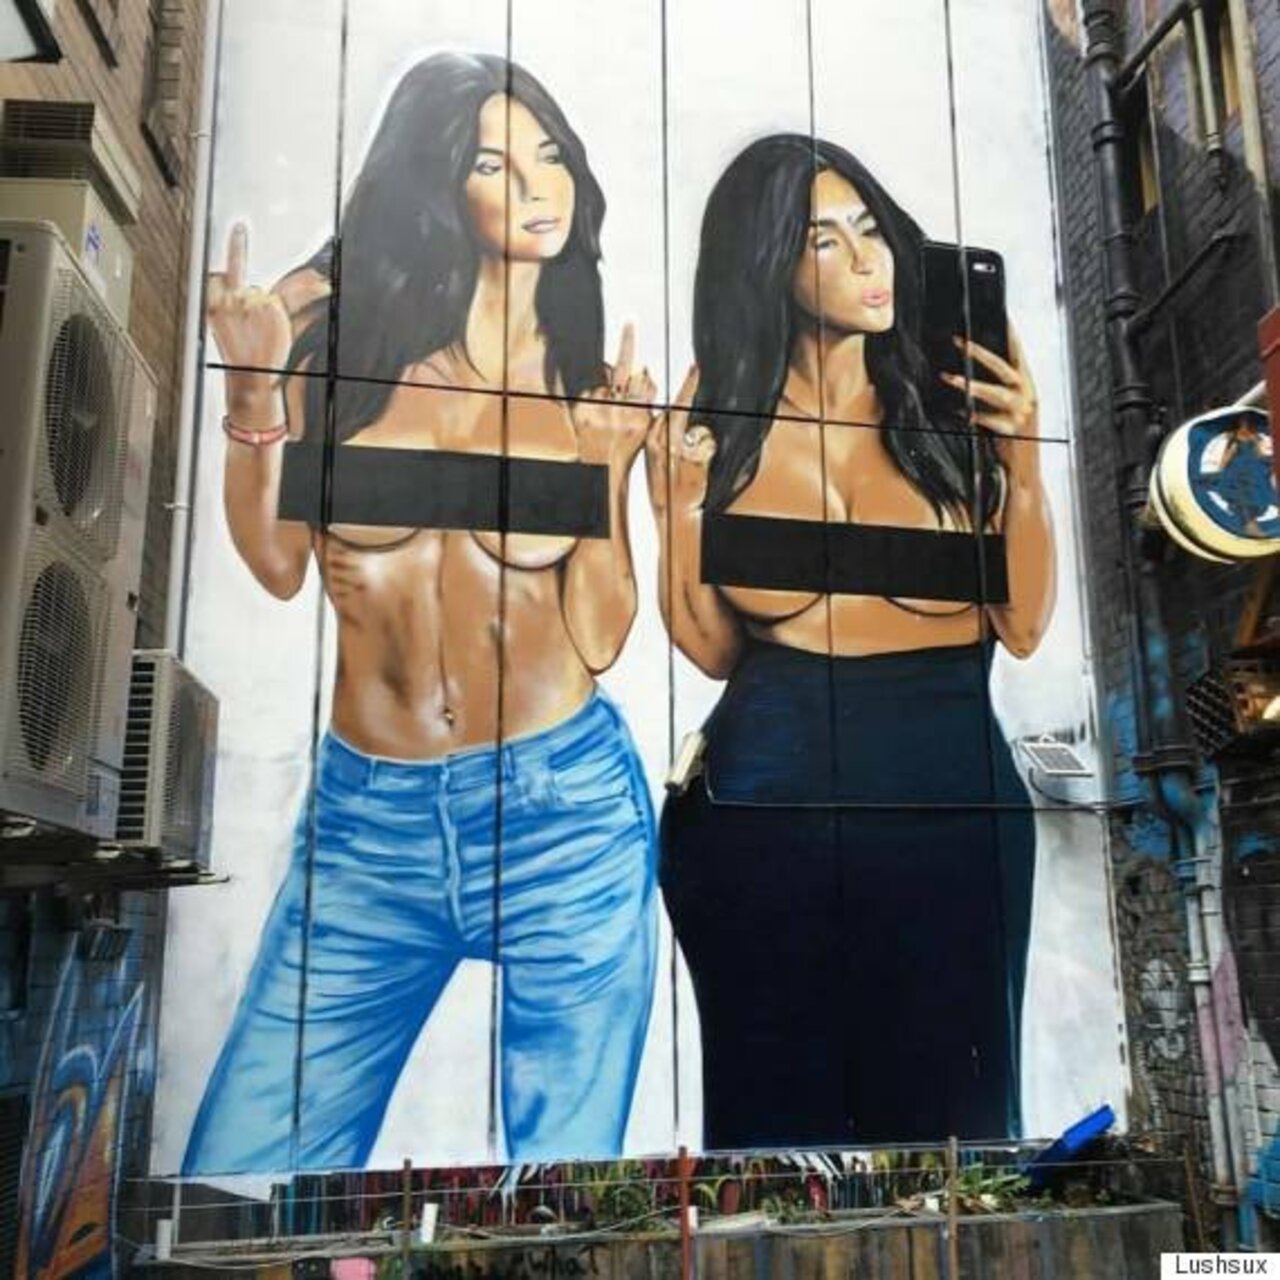 #mural by Lushsux #Melbourne #Australia #Streetart #urbanart #graffiti #art #Ratajkowski #Kardashian https://t.co/Tj8hVe7OKl